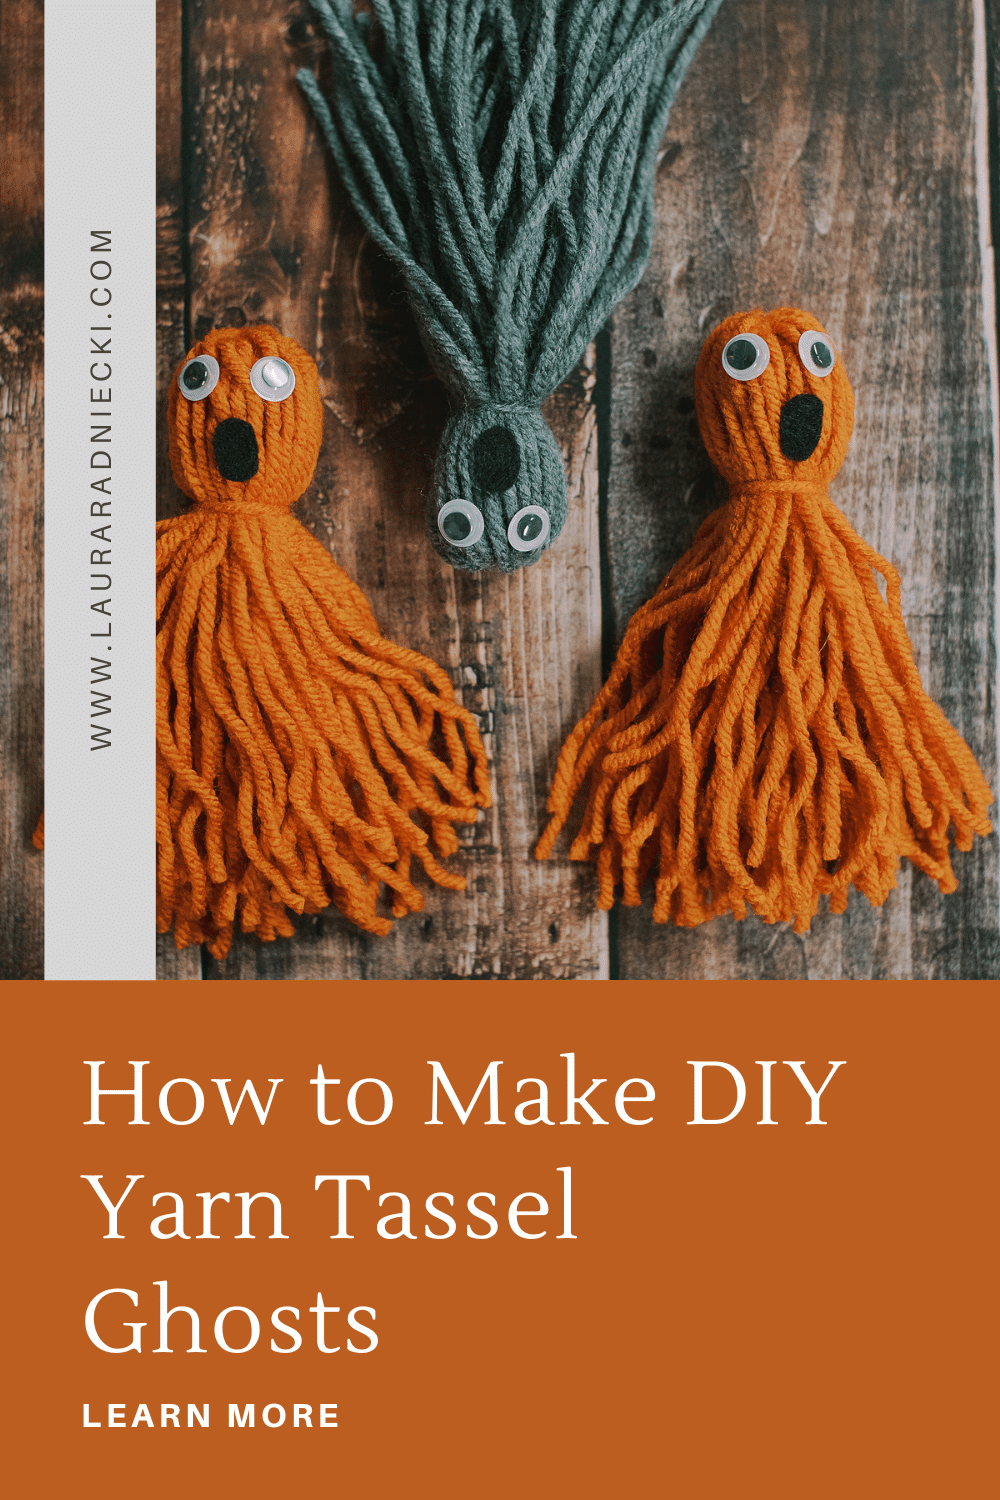 How to make diy yarn tassel ghosts